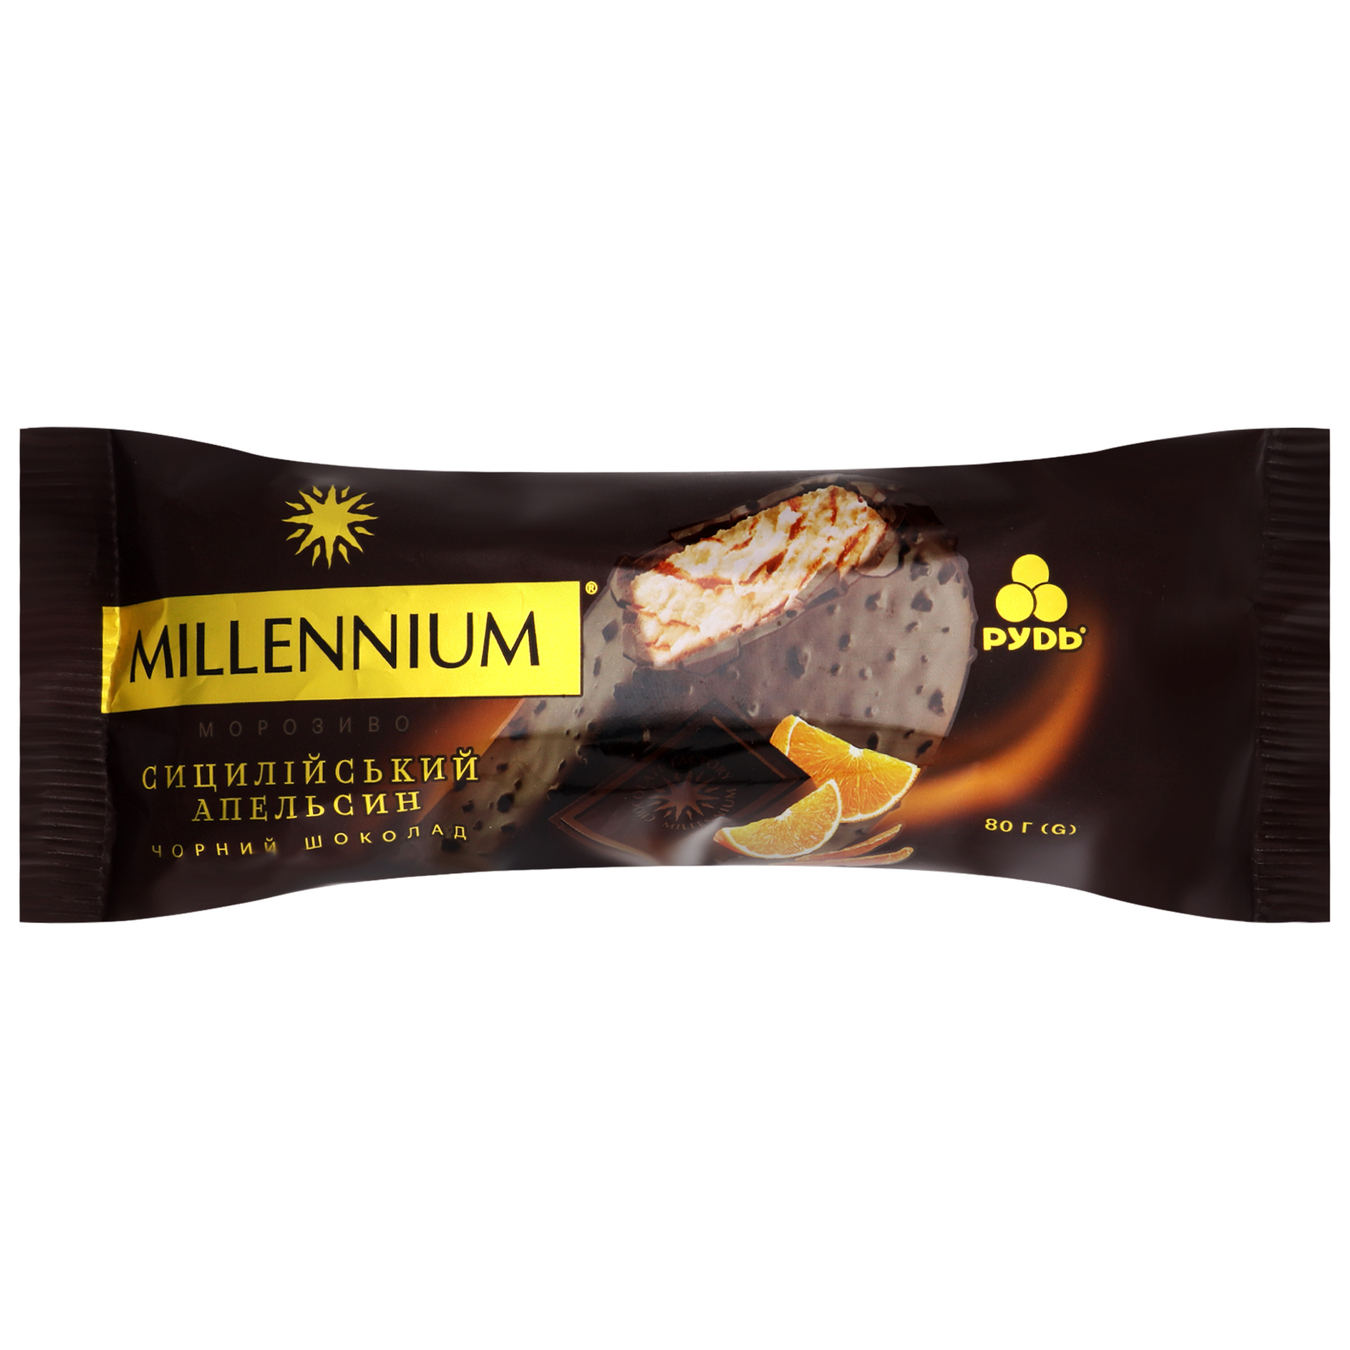 Морозиво Рудь Millennium чорний шоколад-сицилійський апельсин 80г